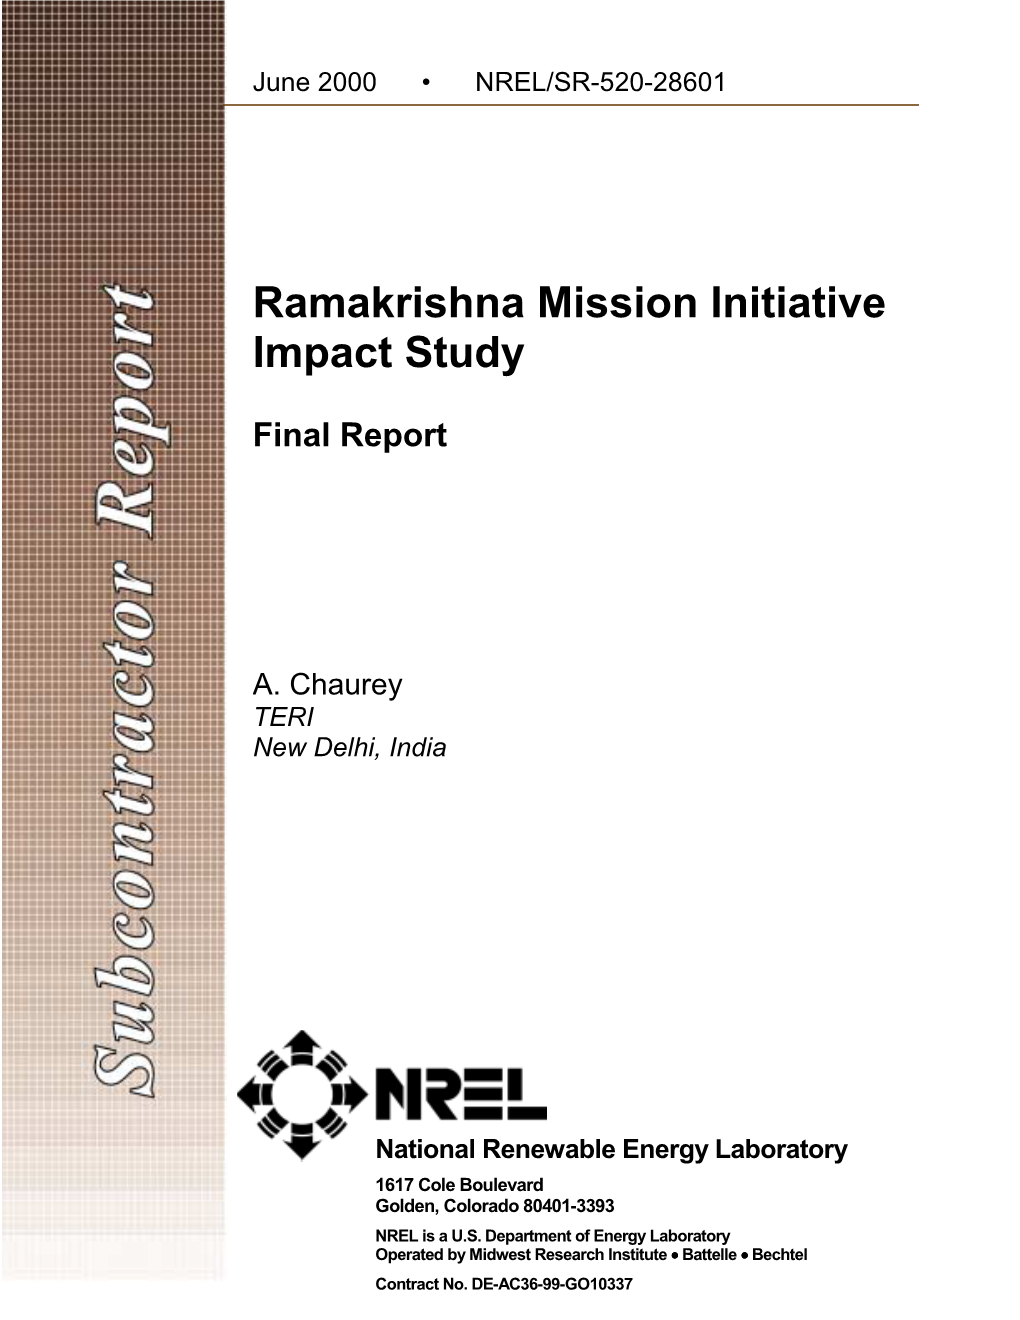 Ramakrishna Mission Initiative Impact Study: Final Report